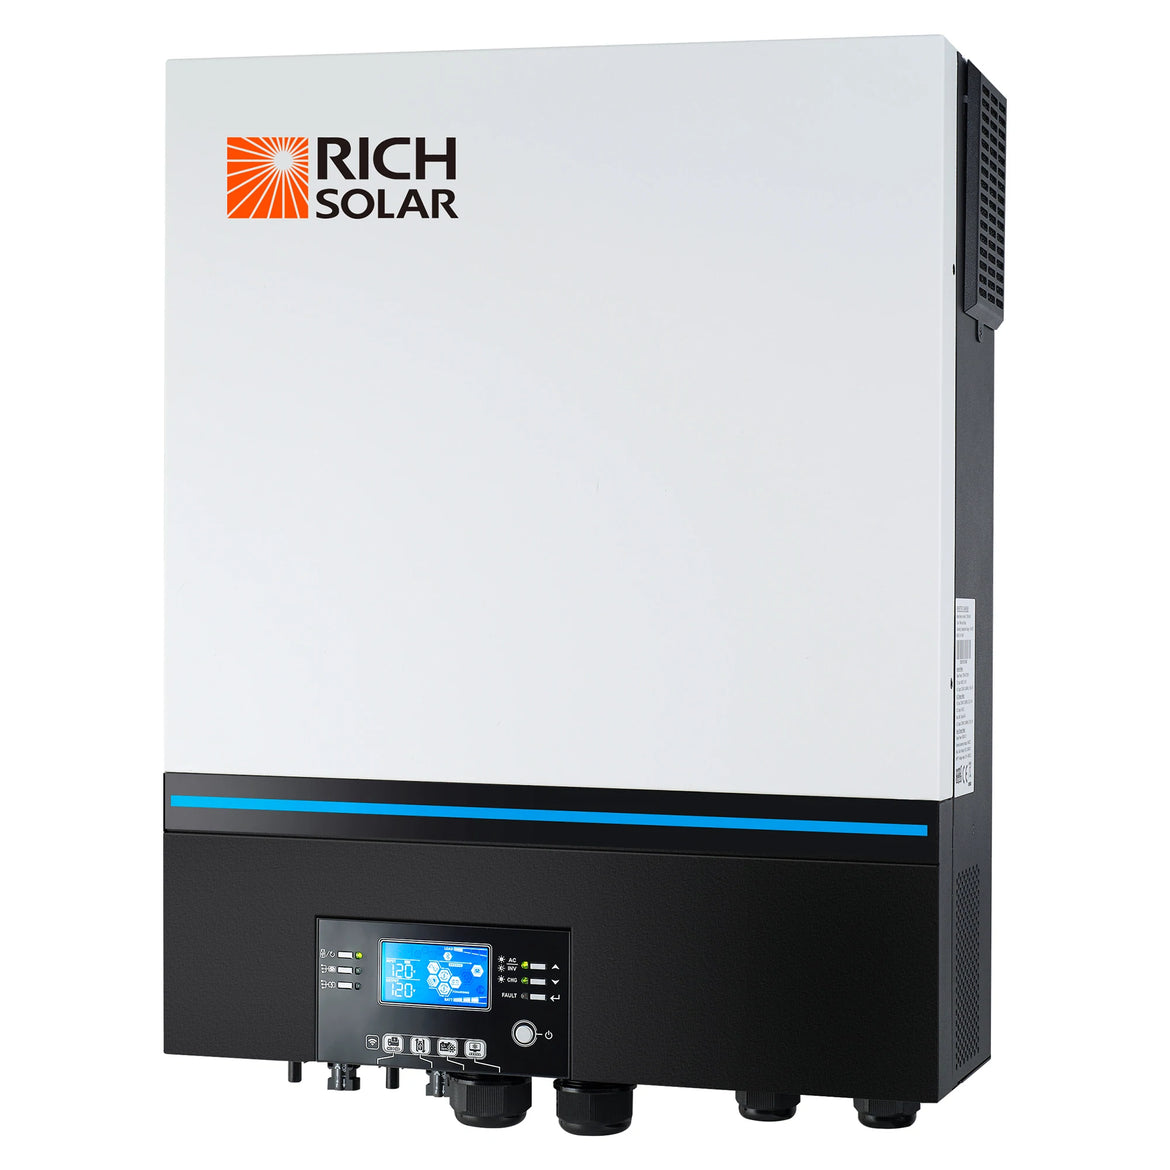 Rich Solar 6000W 48V 120VAC Cabin Kit